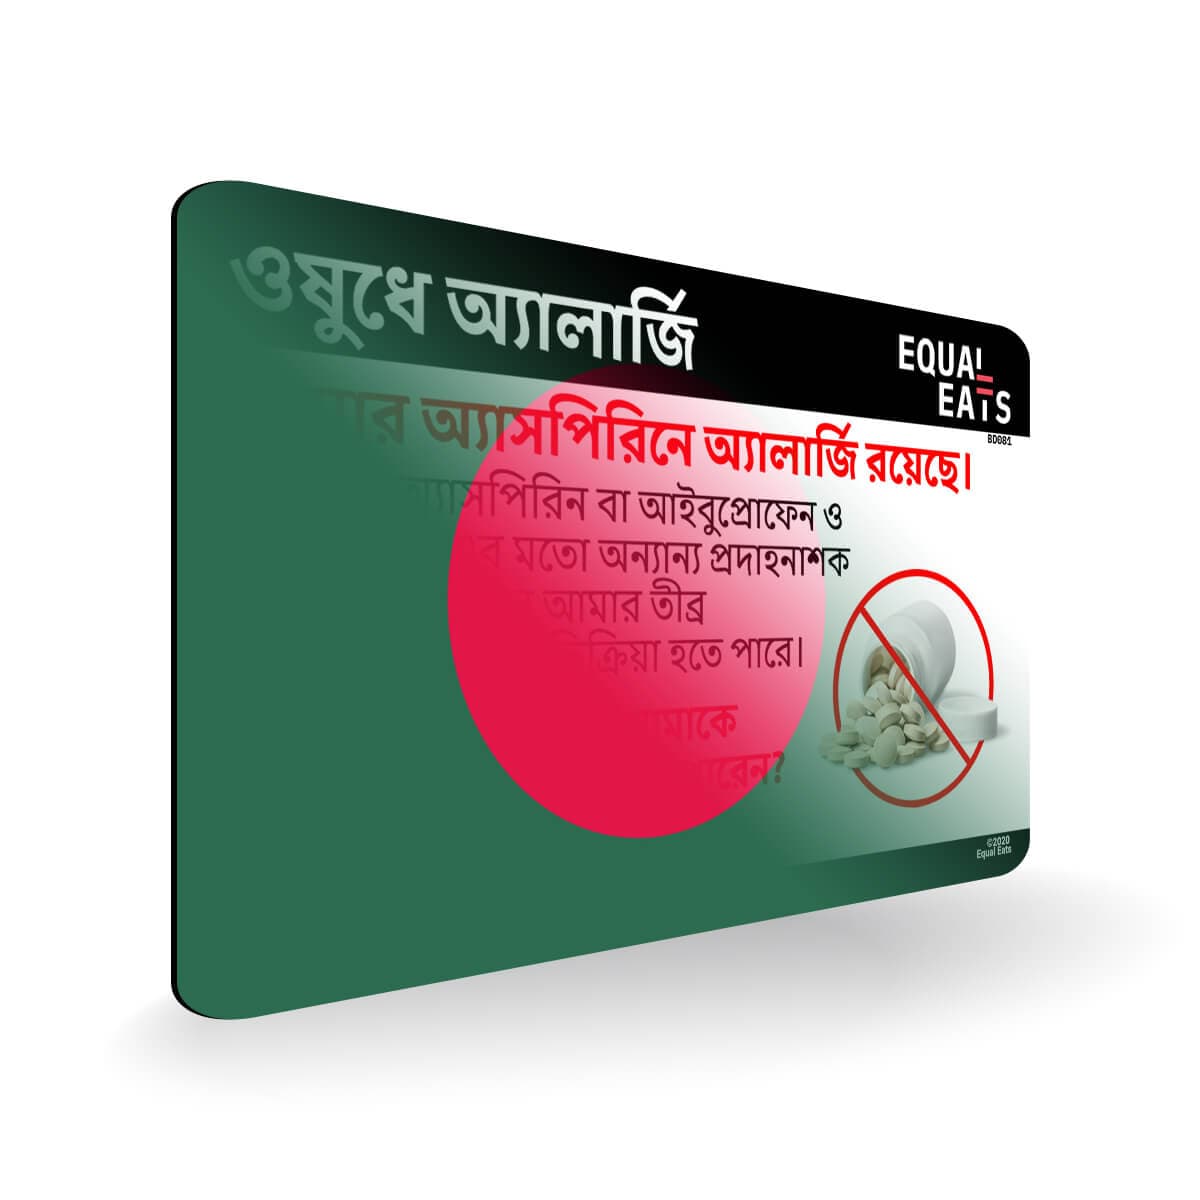 Aspirin Allergy in Bengali. Aspirin medical I.D. Card for Bangladesh